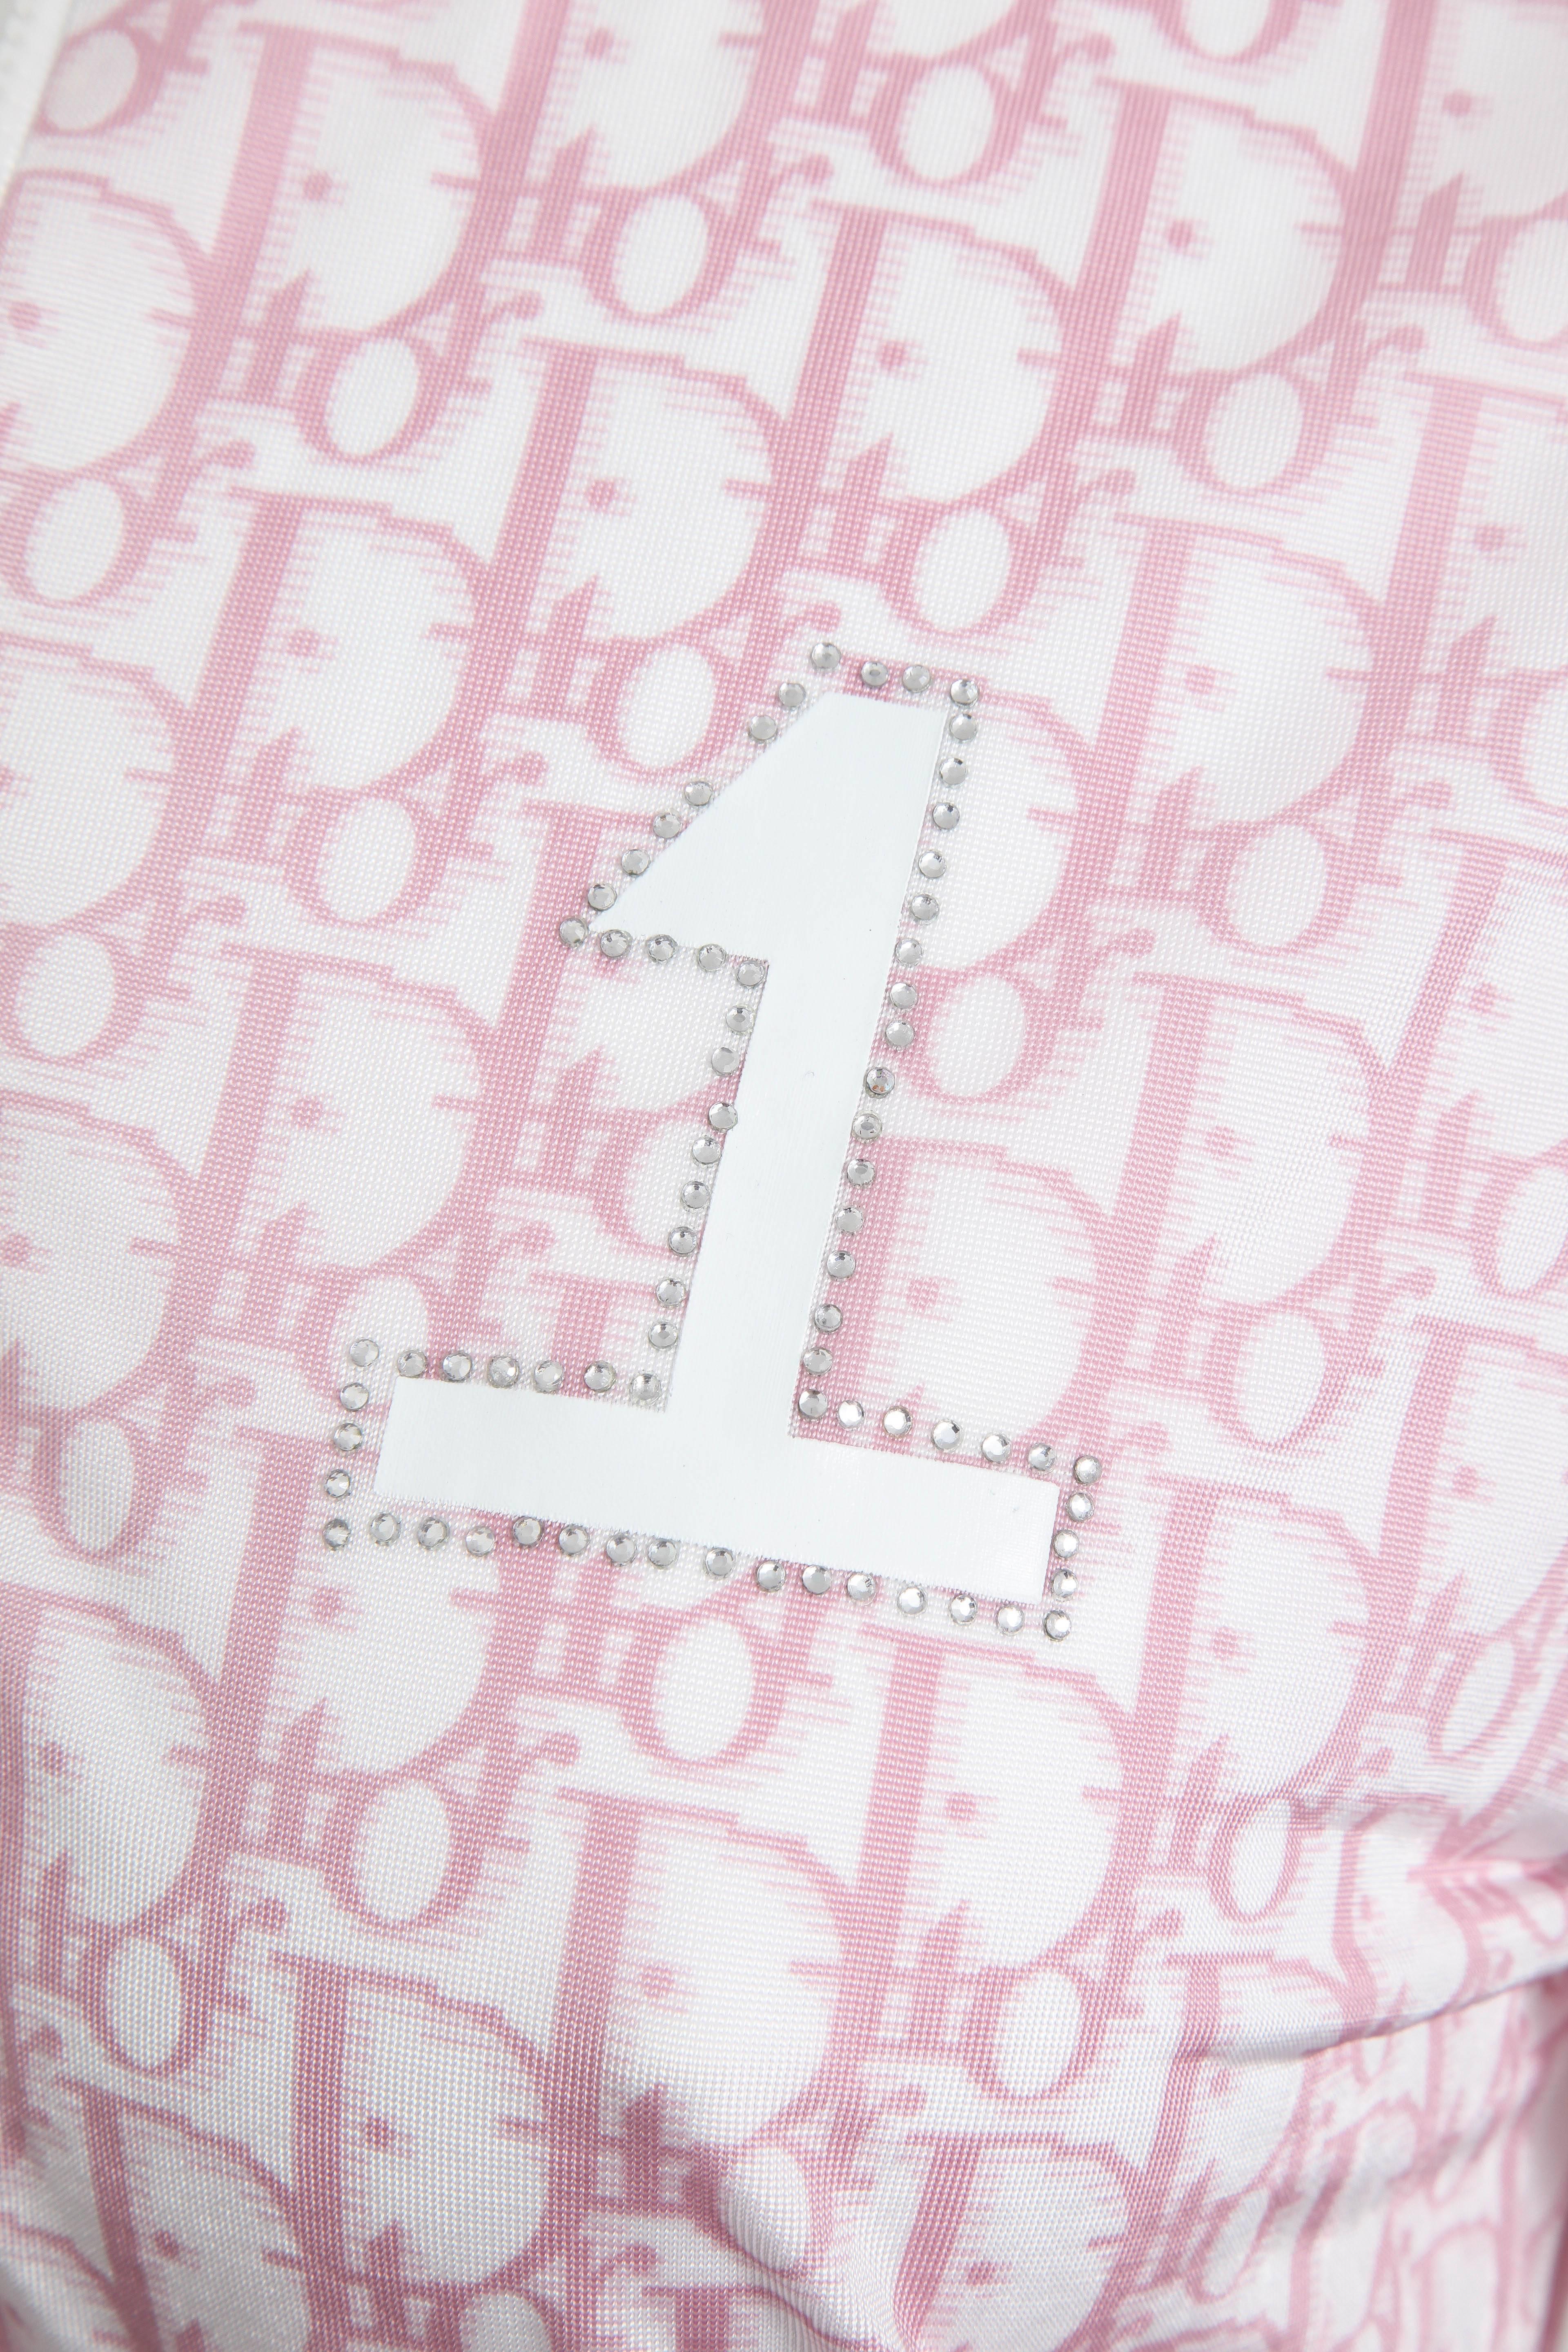 Women's John Galliano for Christian Dior Pink Trotter Logo Shirt For Sale